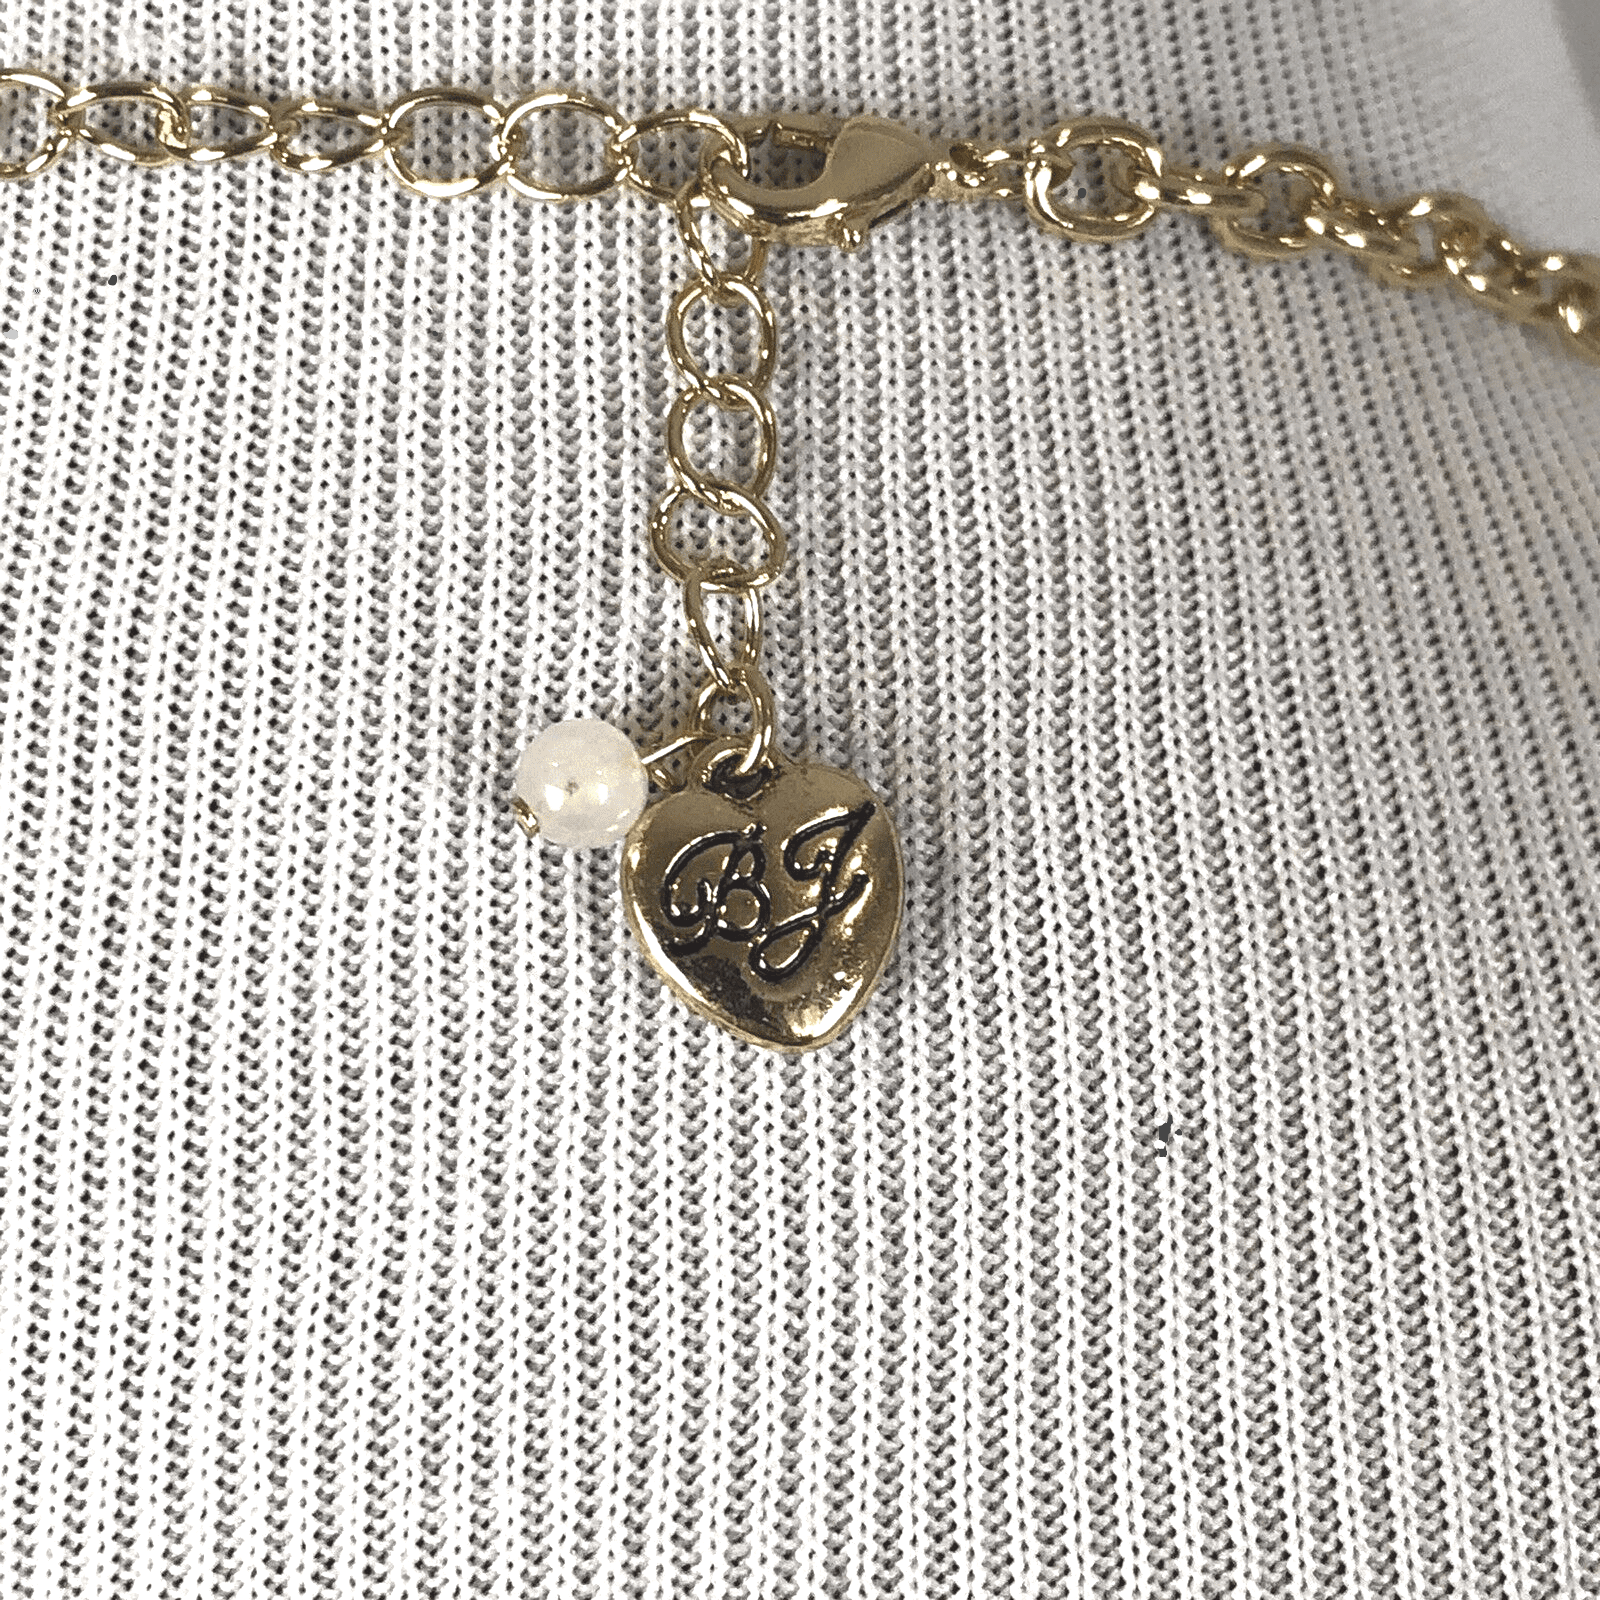 Betsey Johnson Blue Teddy Bear Necklace | Bear necklace, Betsey johnson,  Blue teddy bear